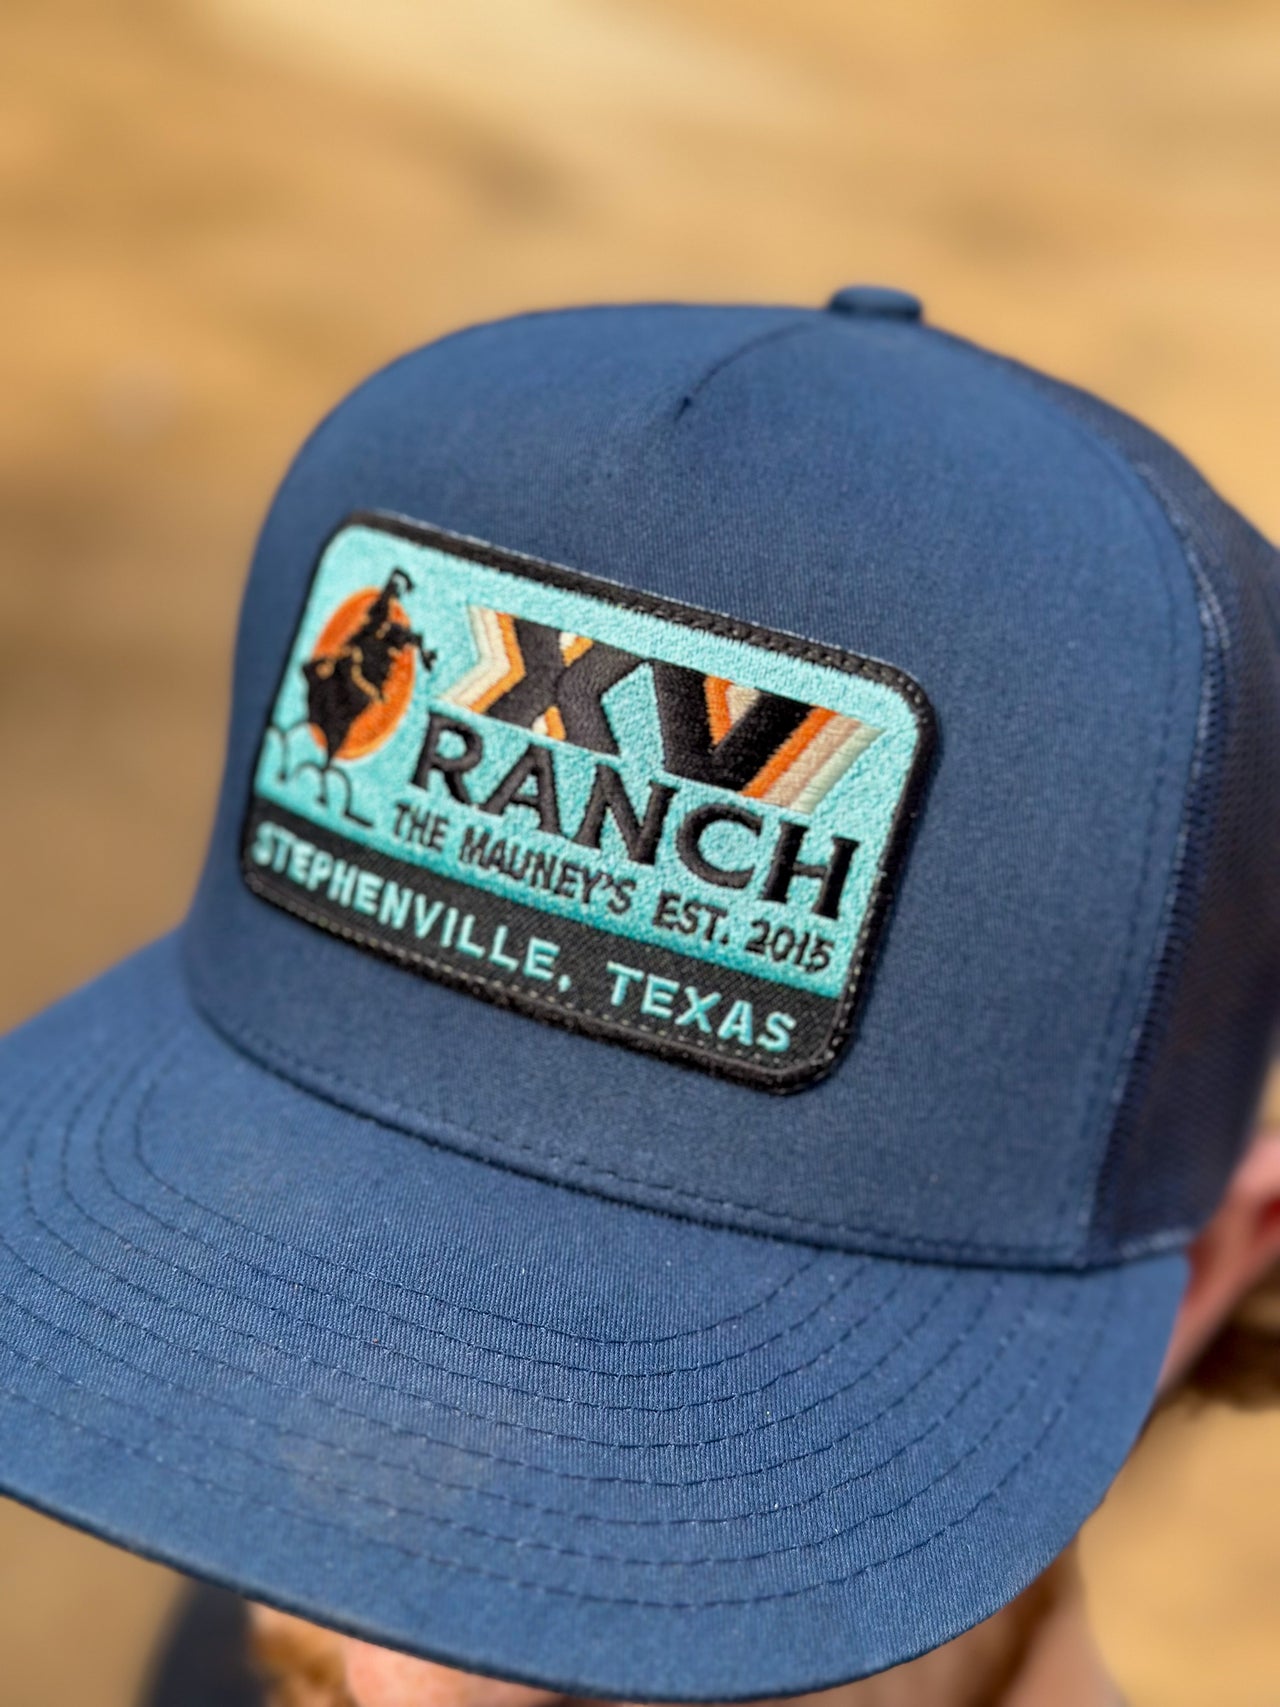 XV Ranch Navy/Teal Cap